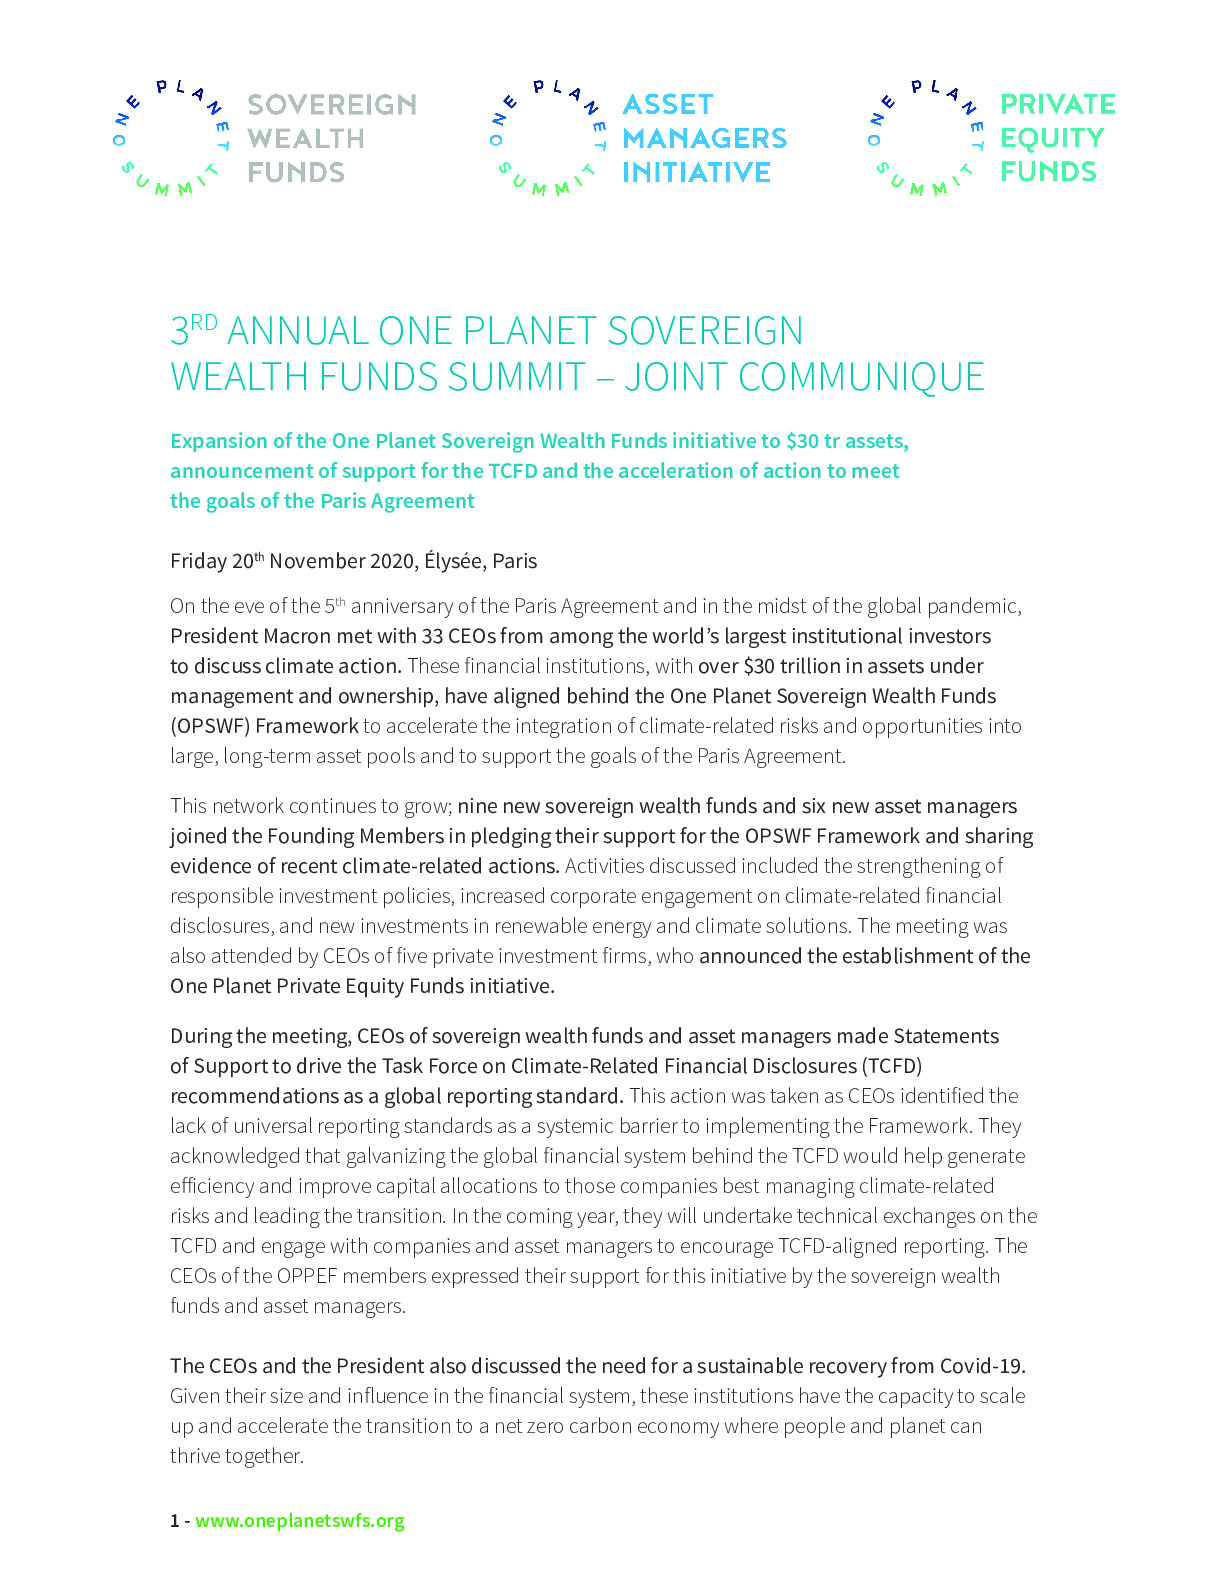 20201120 OPSWF Summit Joint Communique13-pdf